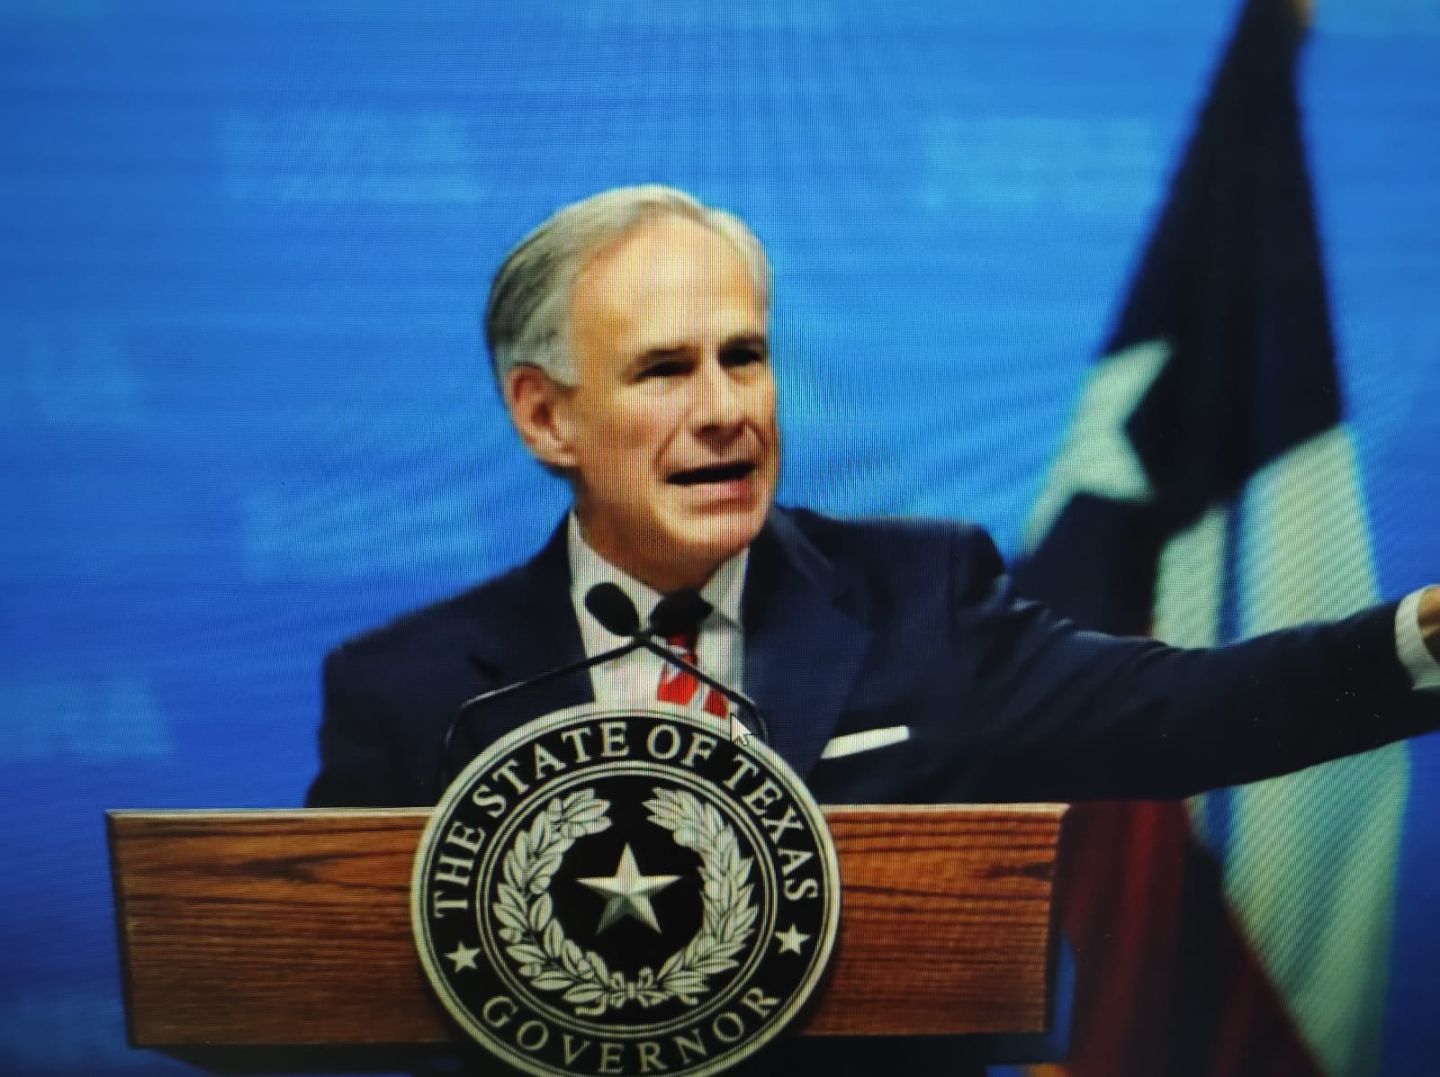 #Gobernador de Texas amenaza con declarar ’invasión’ ante aumento de migrantes